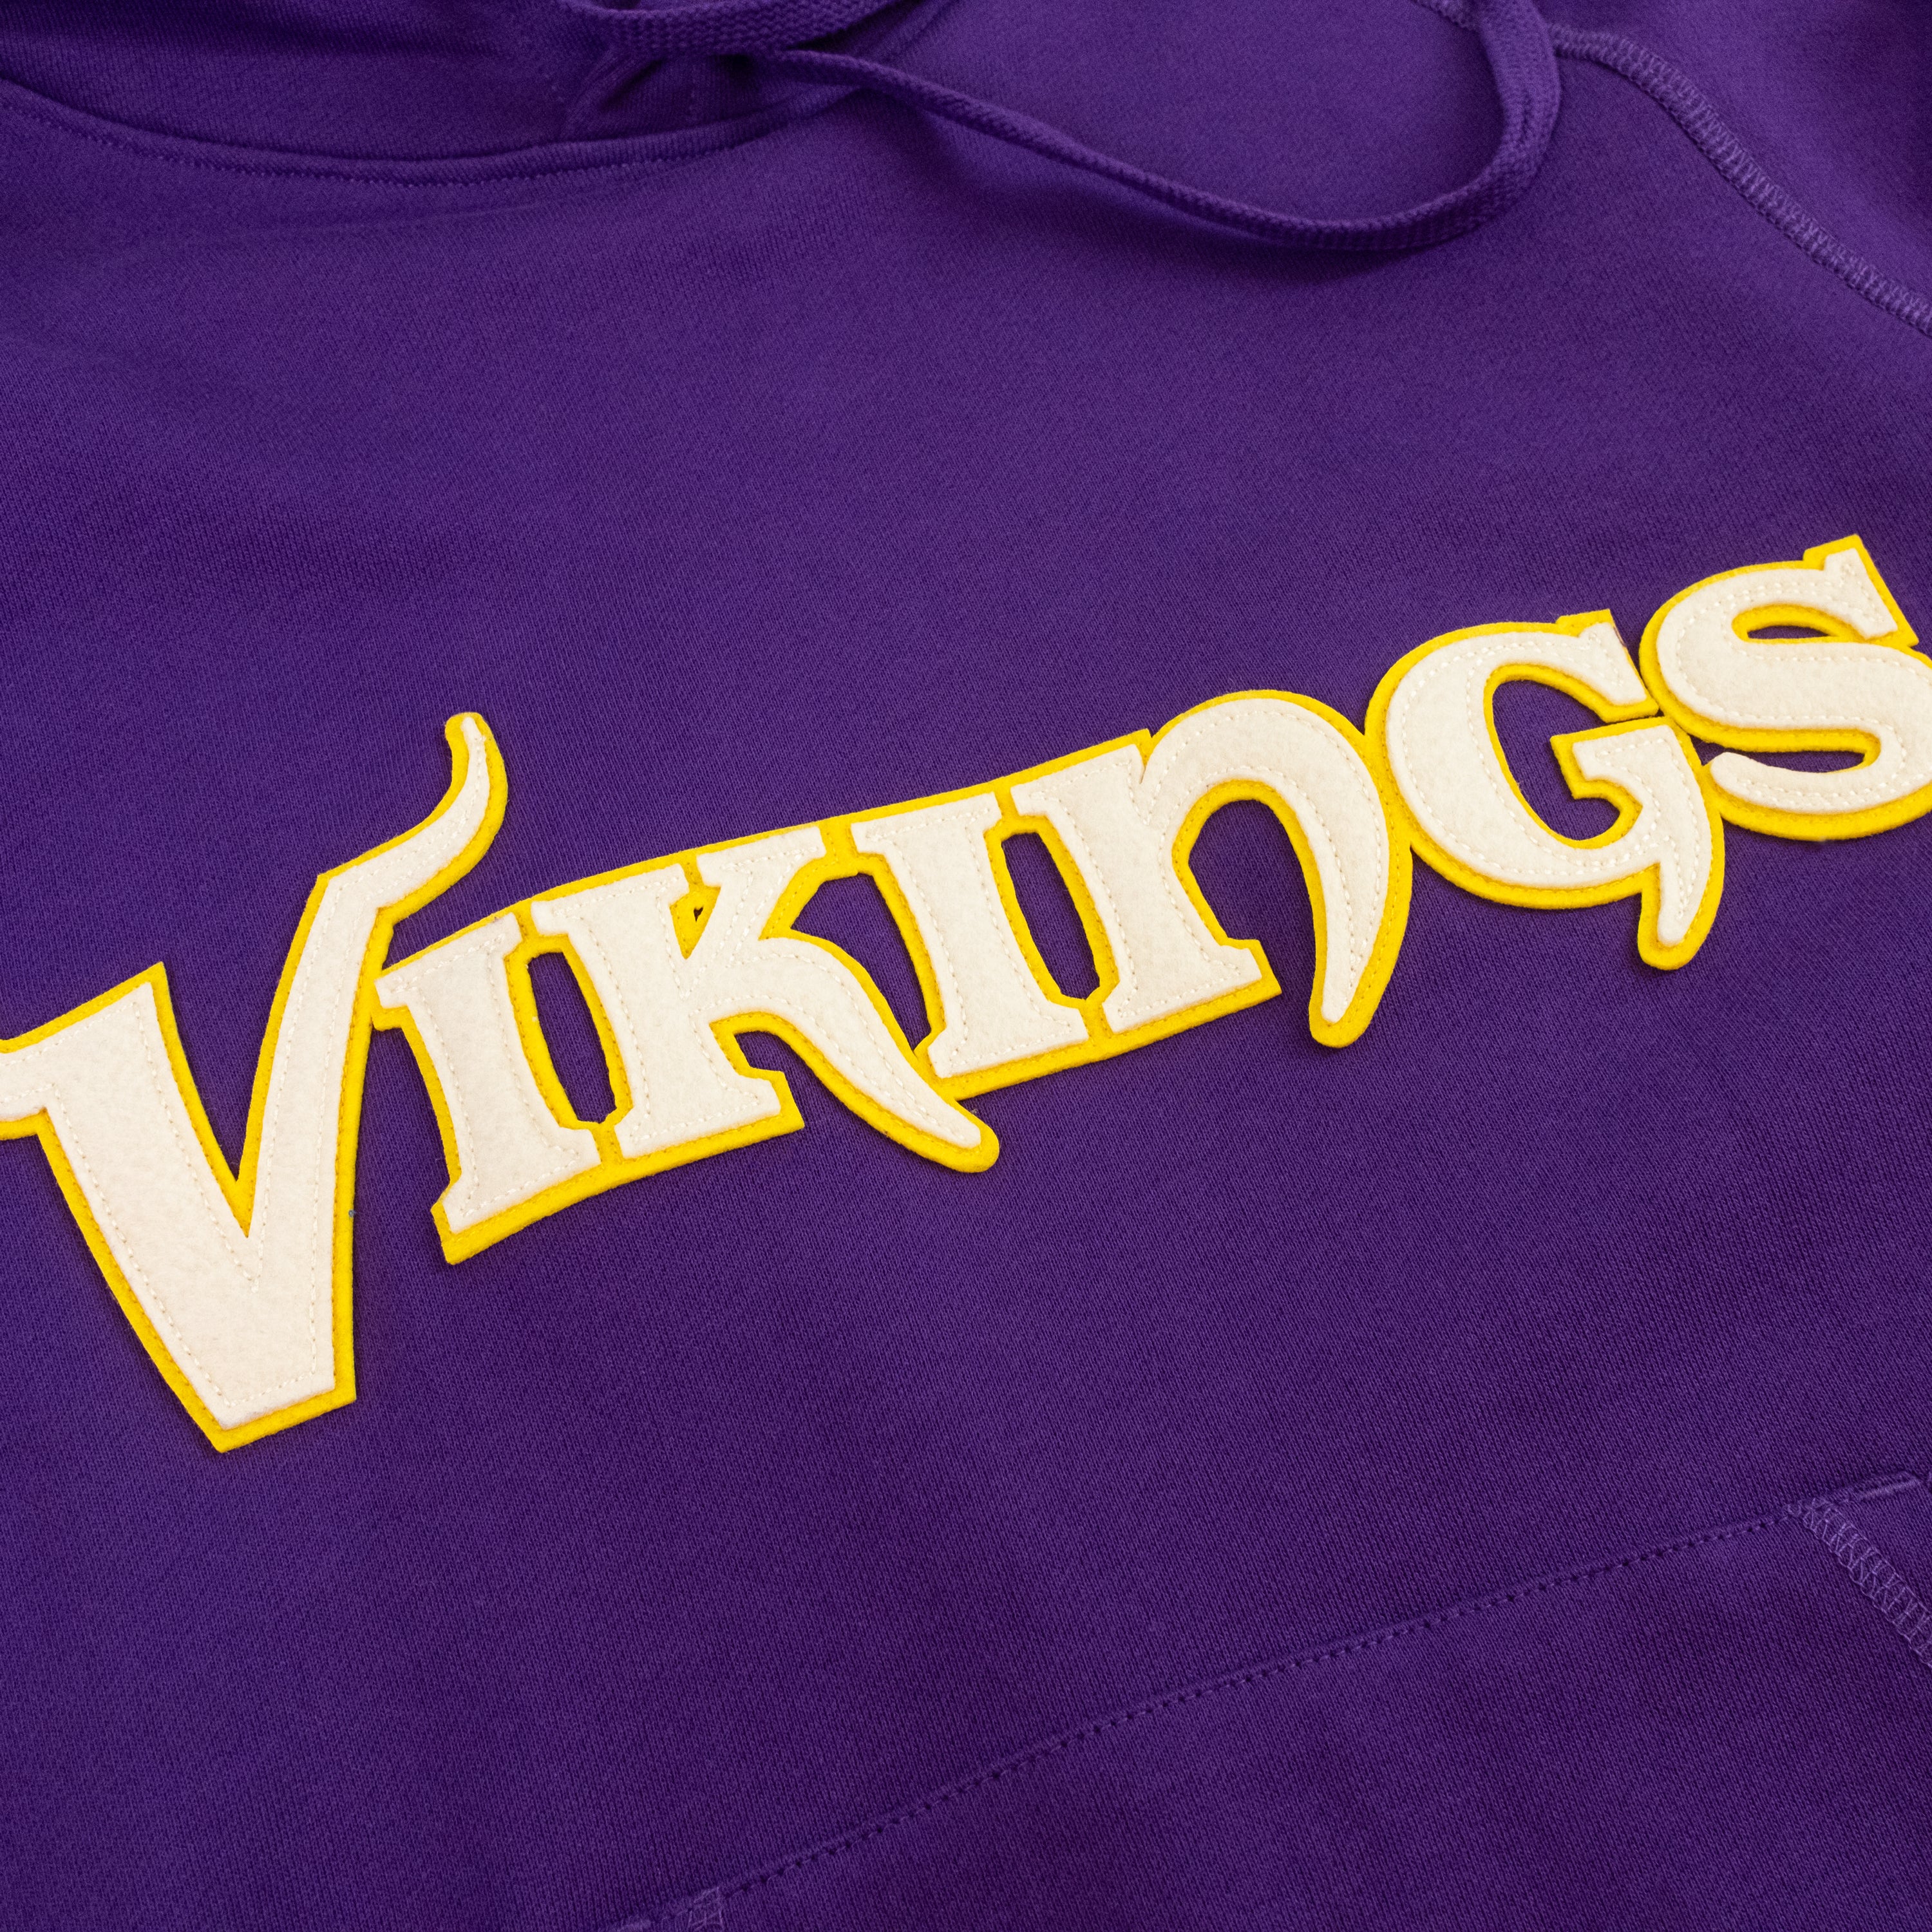 Minnesota Vikings French Terry Hooded Sweatshirt